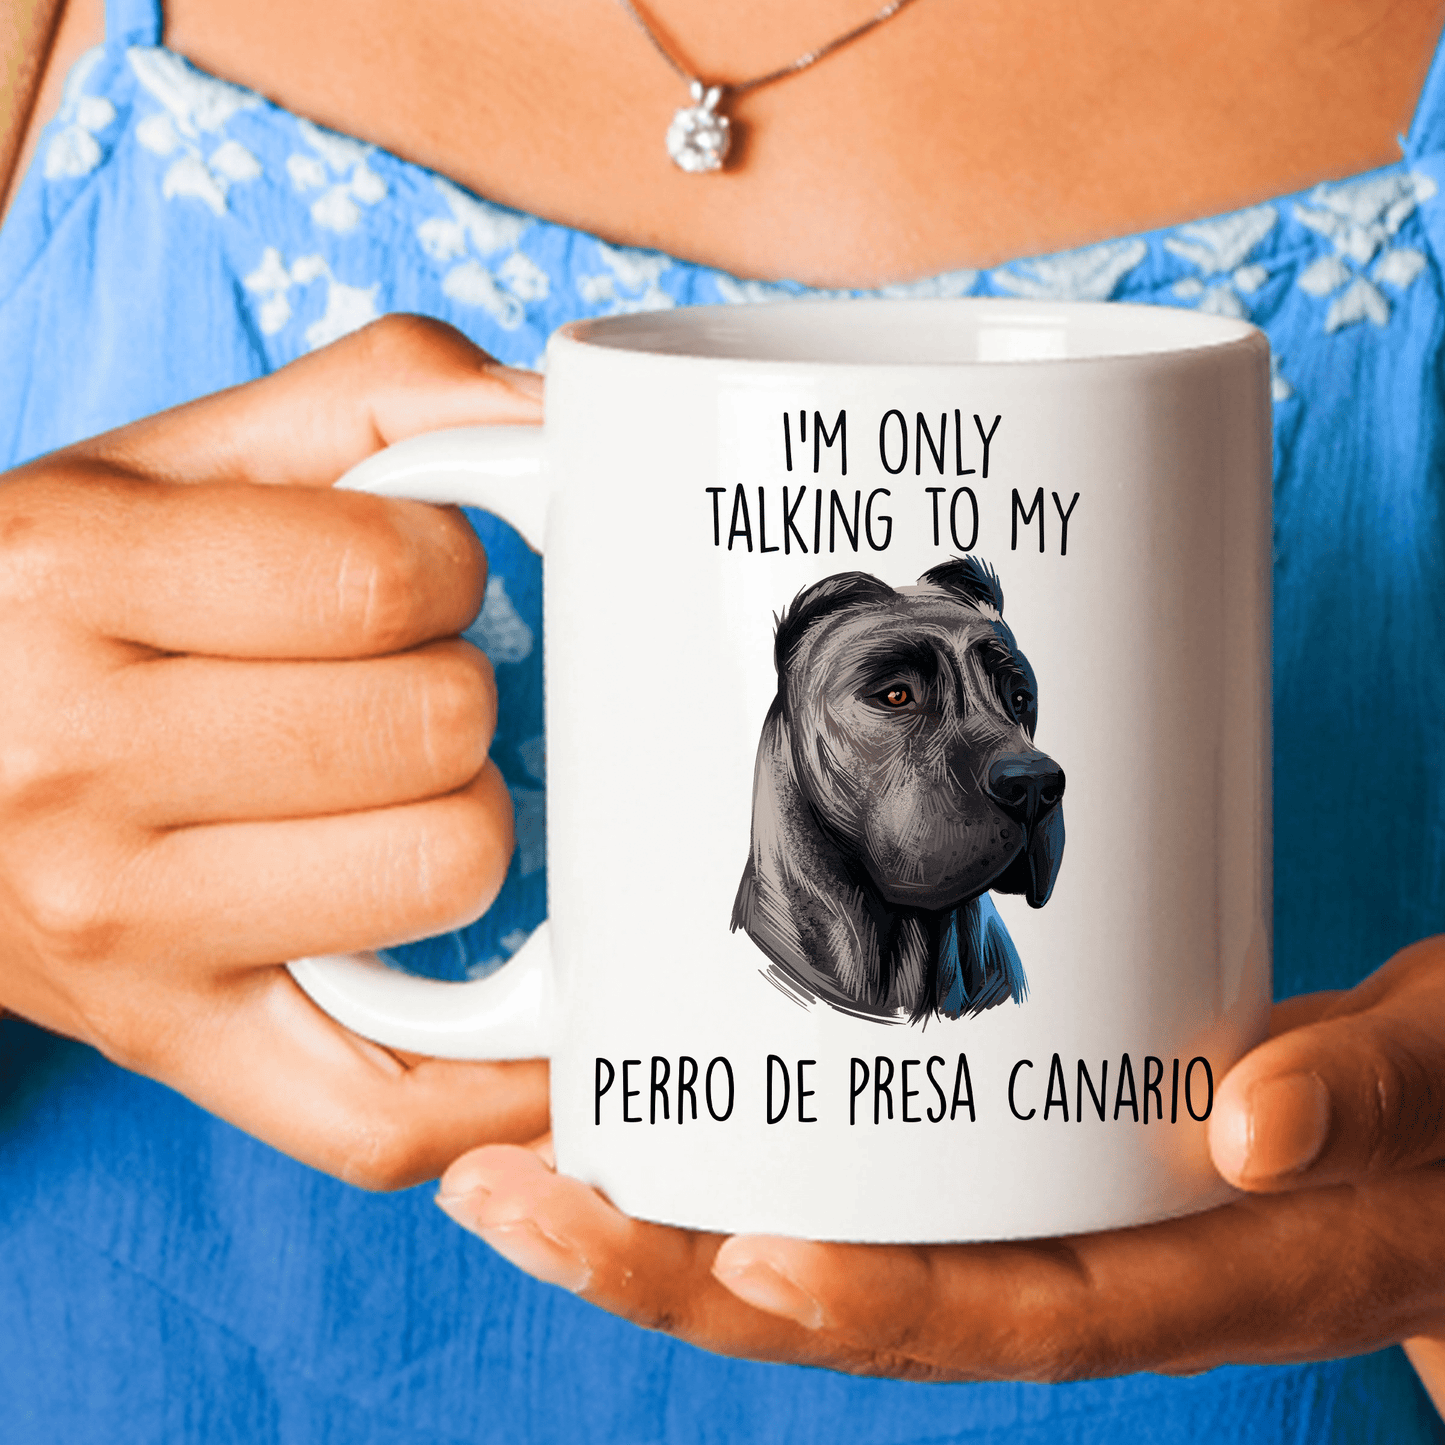 Perro de Presa Canario Funny Ceramic Coffee Mug I'm Only Talking to my Dog